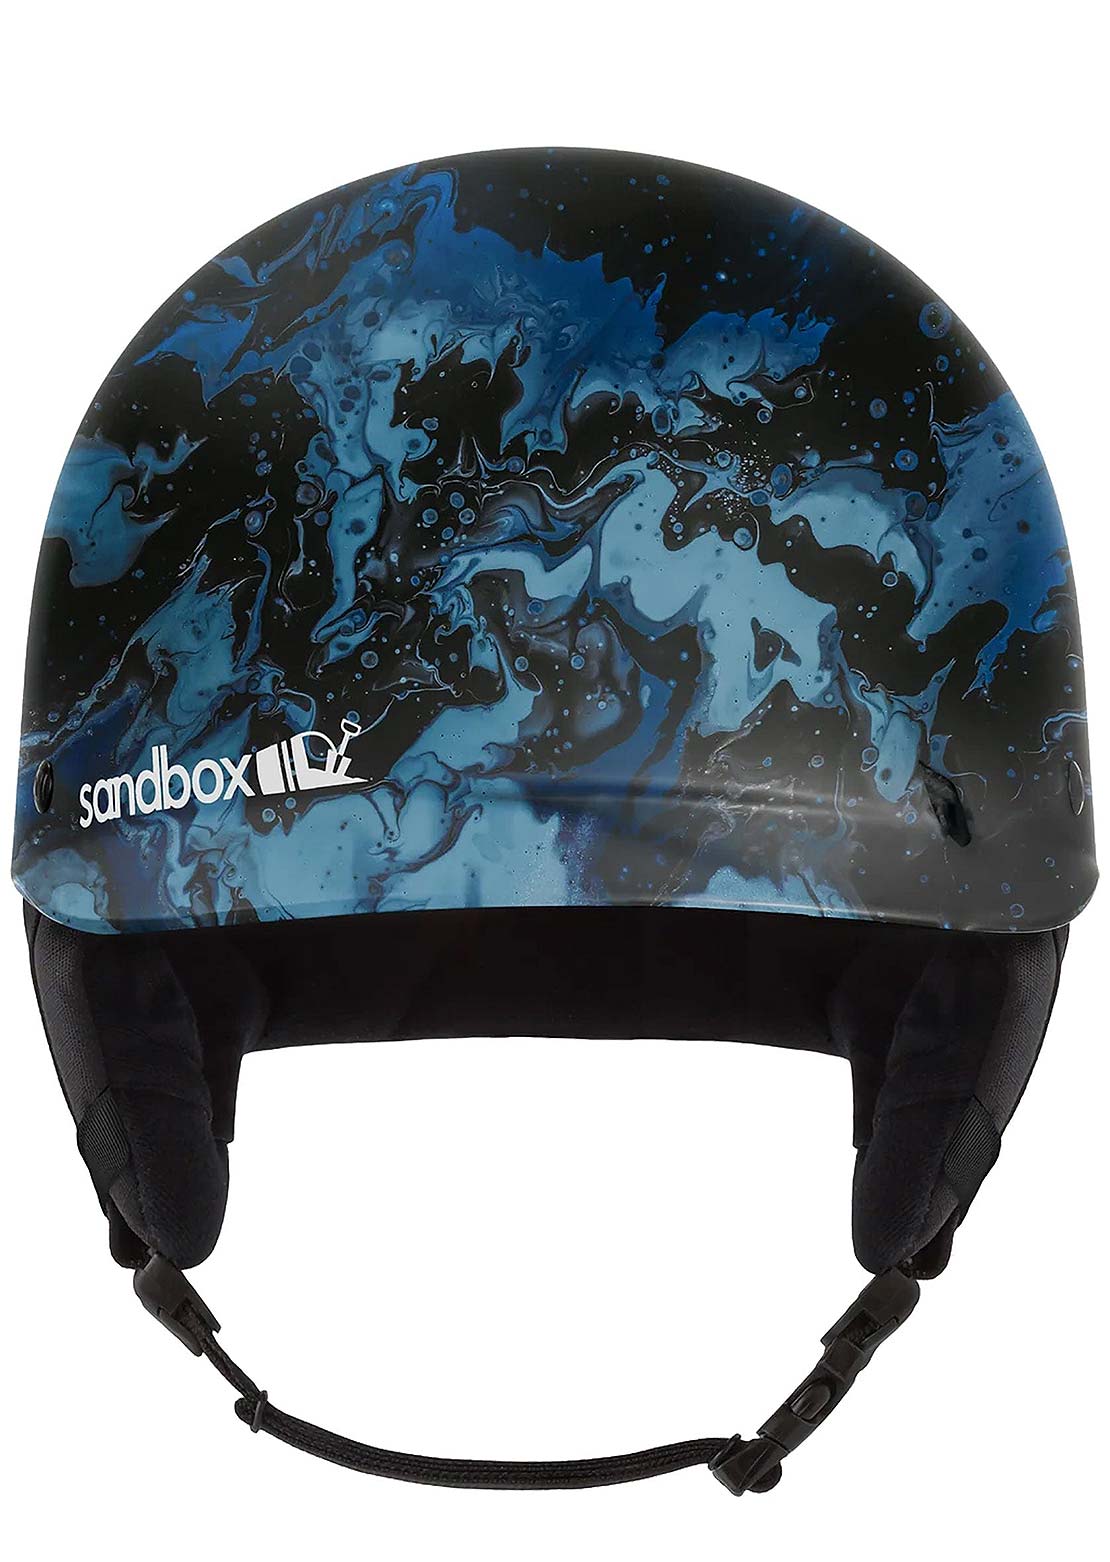 Sandbox Classic 2.0 Snow Winter Helmet Epoxy Run